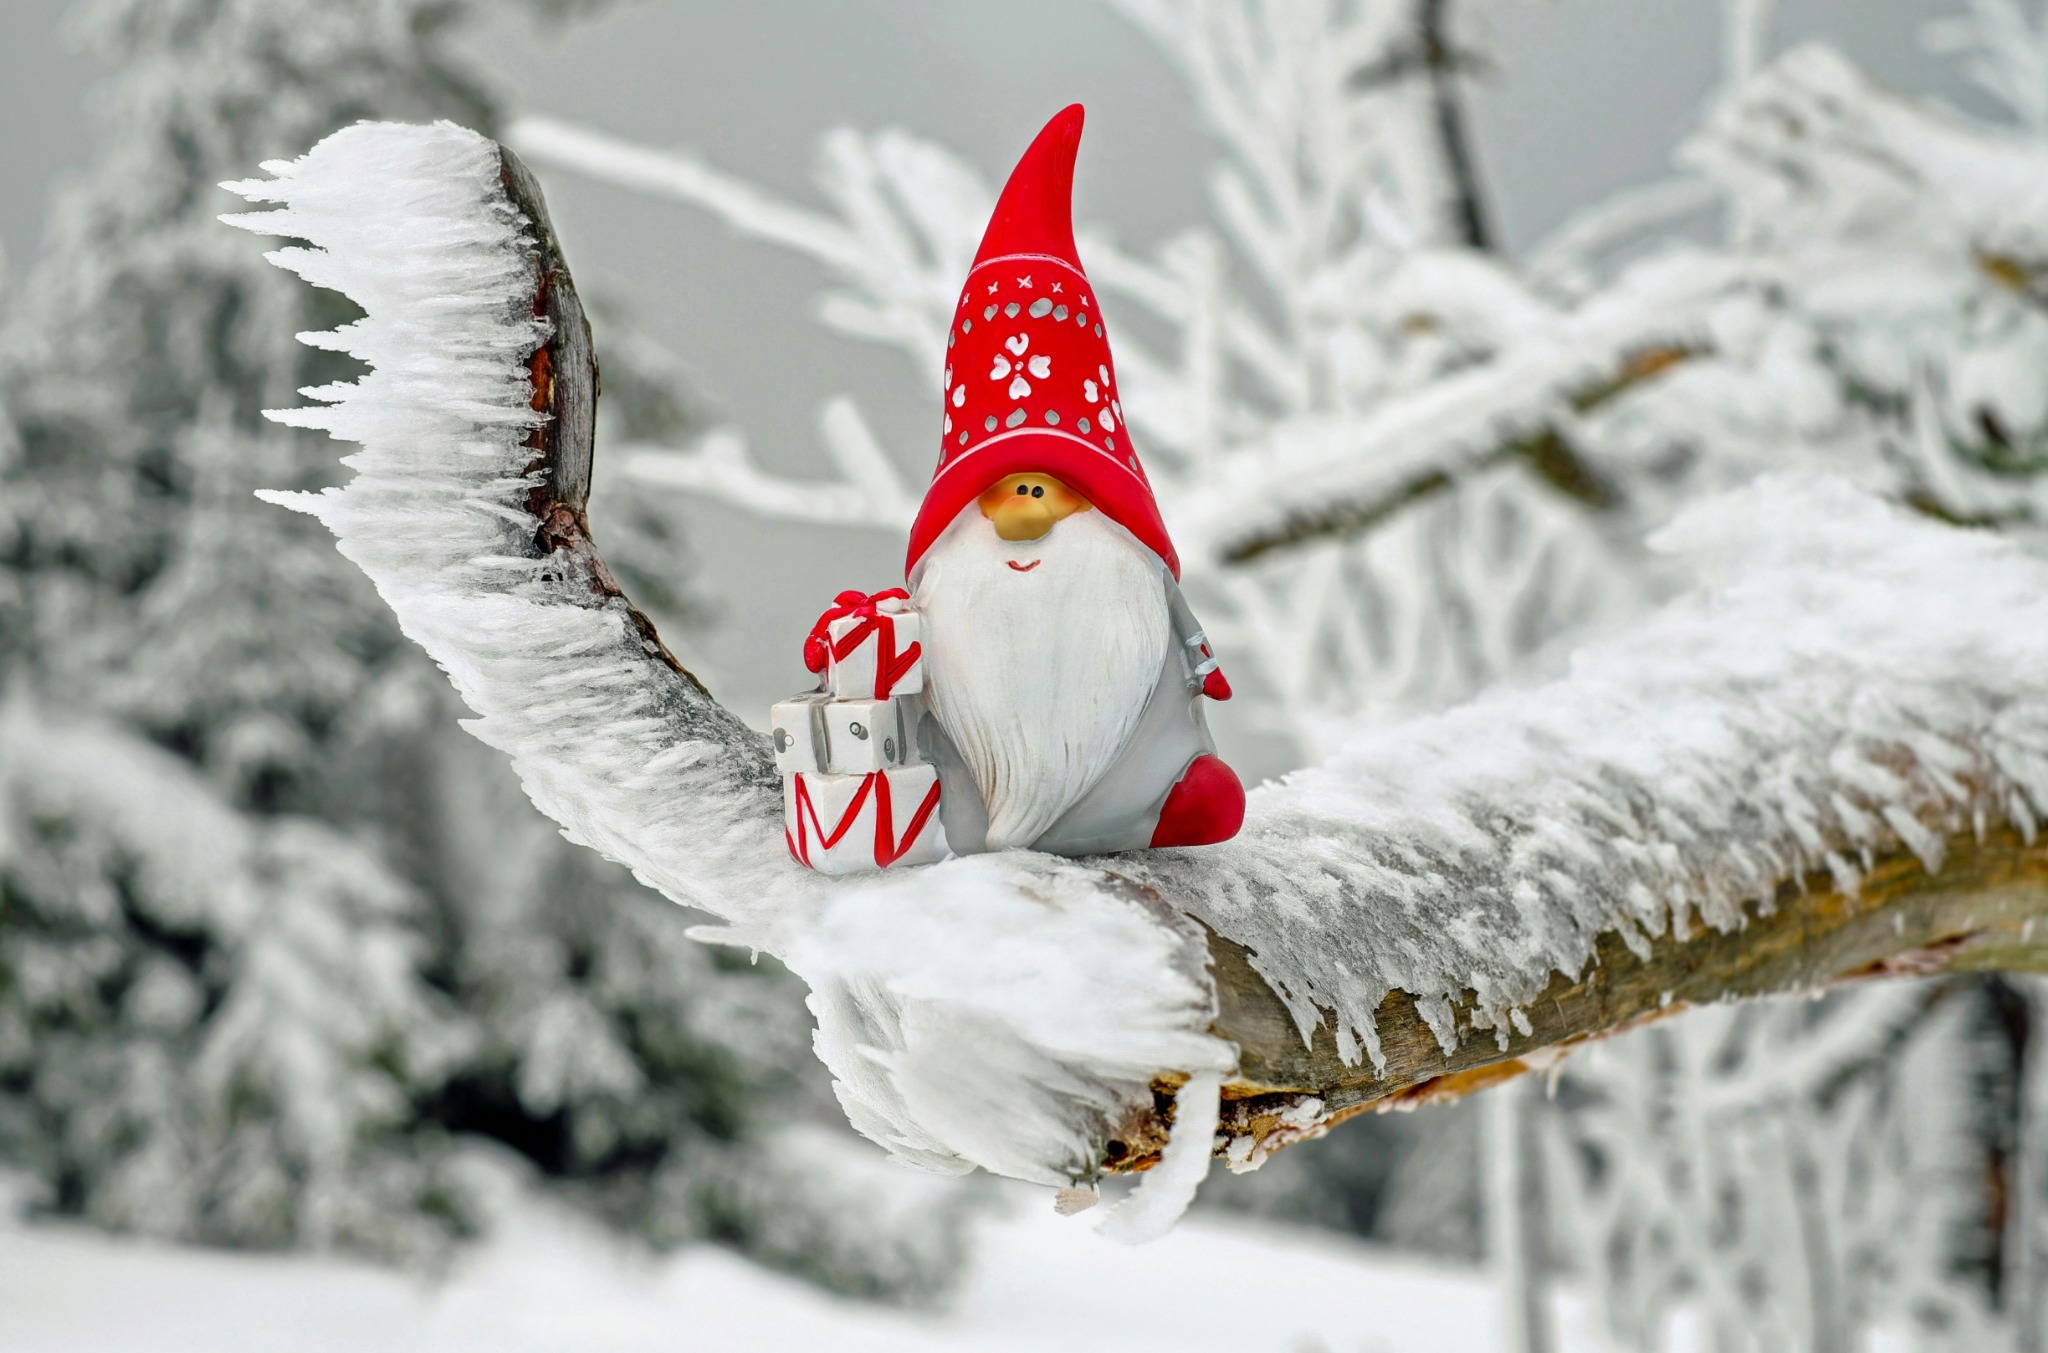 Festive gnome snowy tree decoration